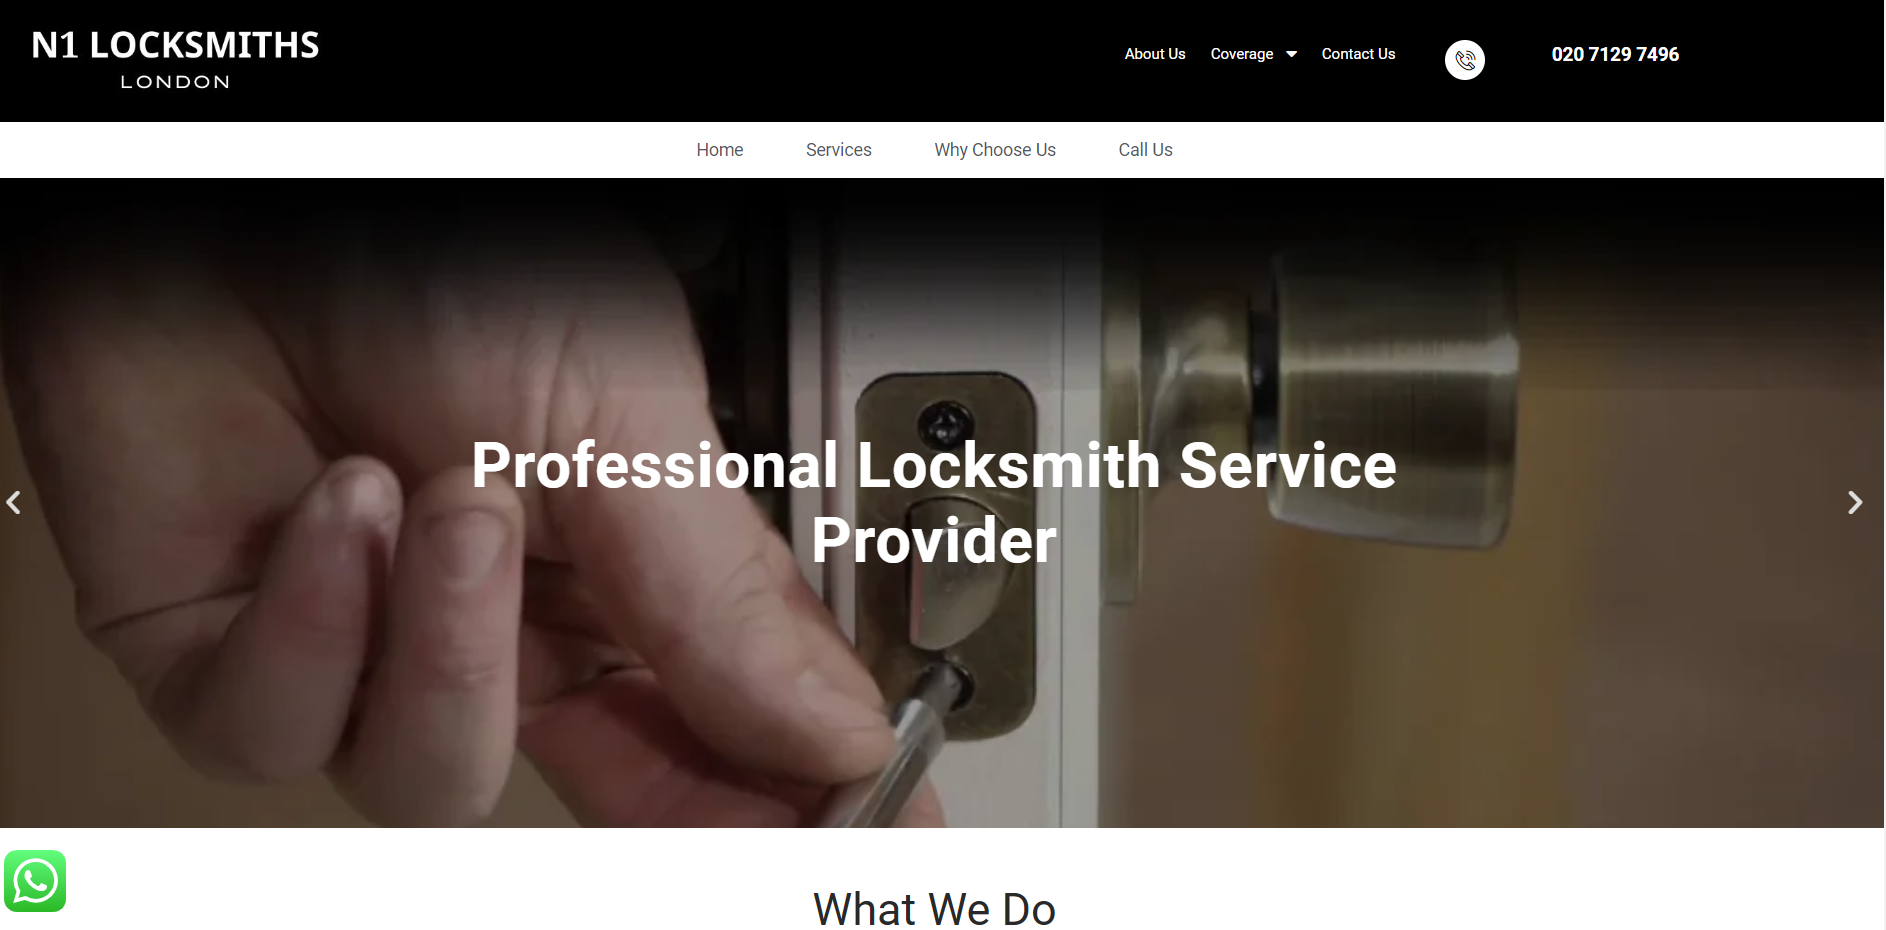 N1 Locksmiths Ltd